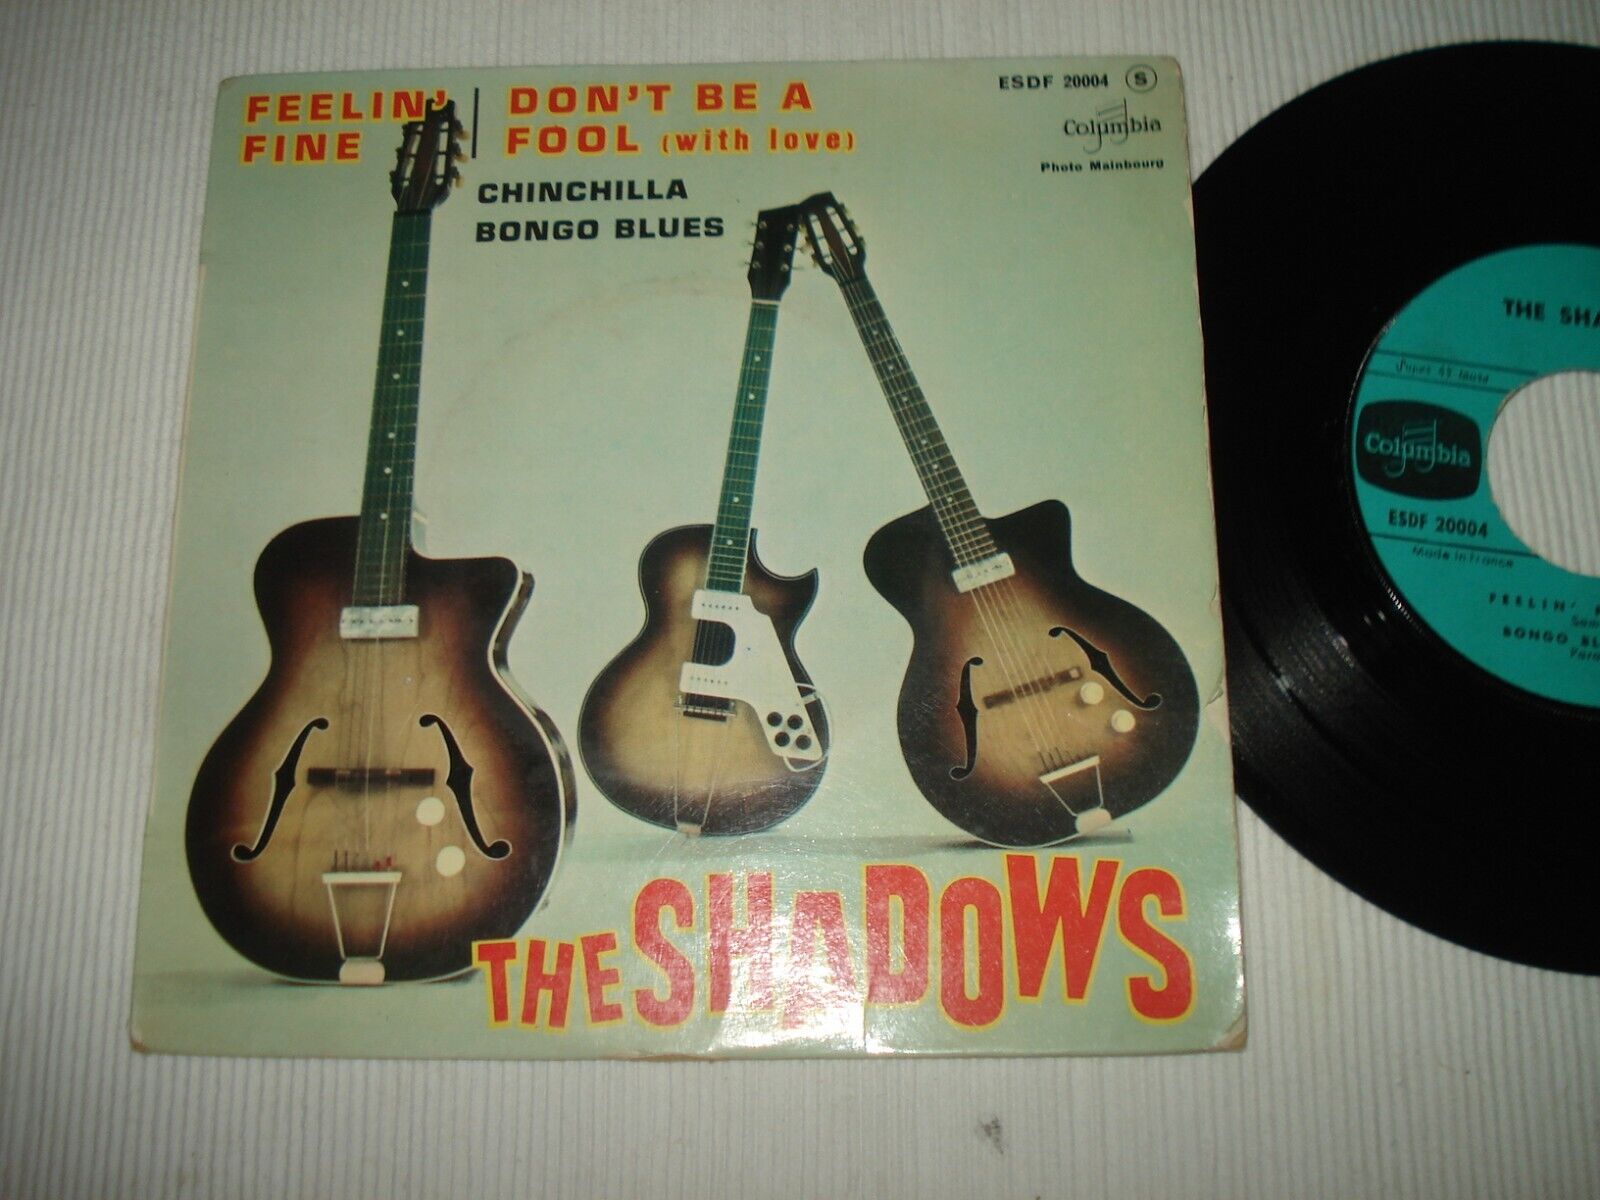 B10 / The Shadows - Feelin' Fine - EP - Columbia ESDF 20004 S - Fr 1960 EX/EX